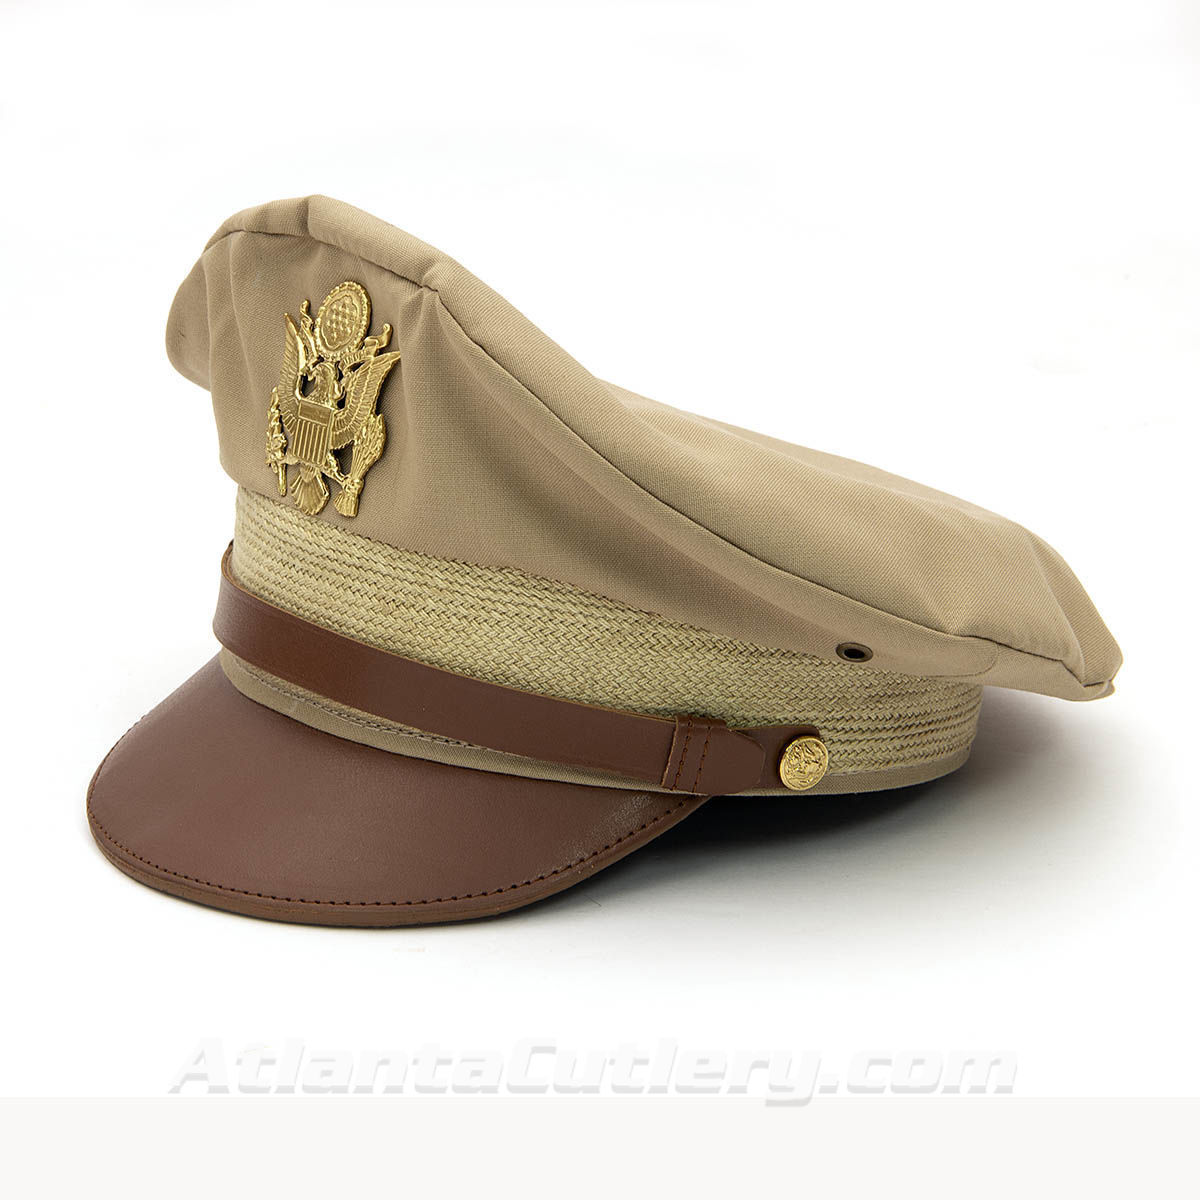 Khaki US WWII Army Officer’s Crush Cap Replica